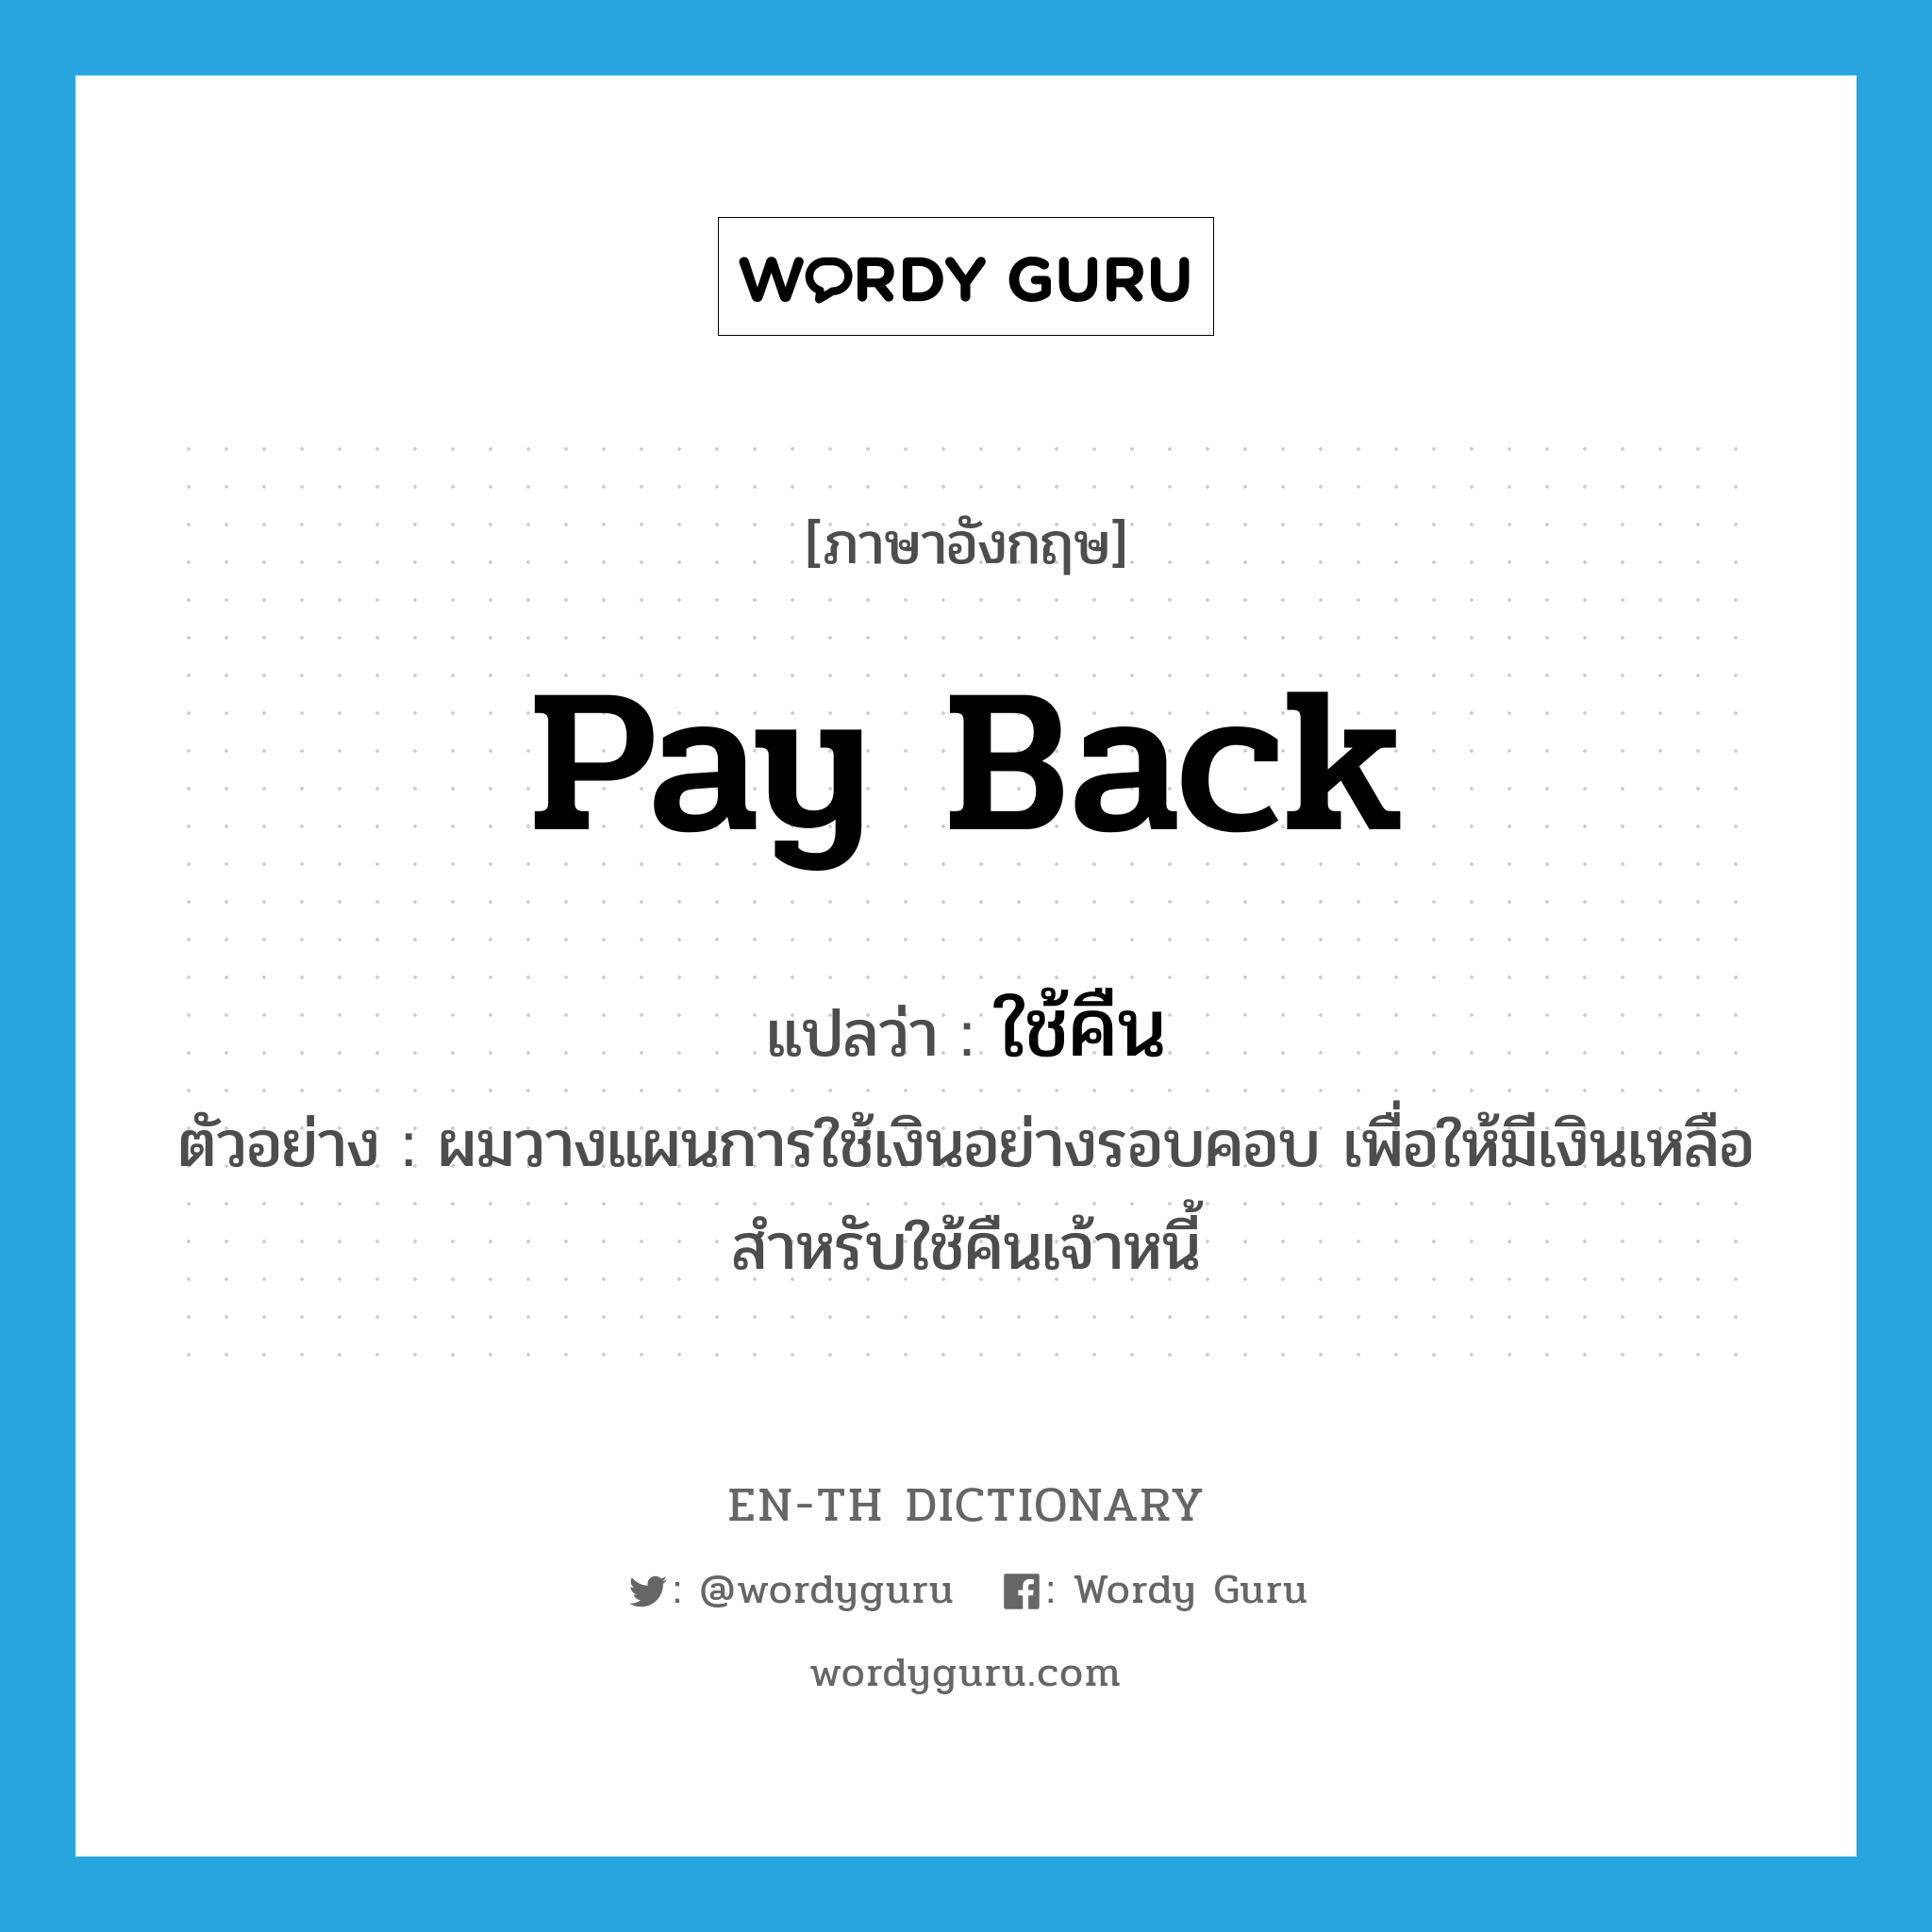 pay back แปลว่า?, คำศัพท์ภาษาอังกฤษ pay back แปลว่า ใช้คืน ประเภท V ตัวอย่าง ผมวางแผนการใช้เงินอย่างรอบคอบ เพื่อให้มีเงินเหลือสำหรับใช้คืนเจ้าหนี้ หมวด V